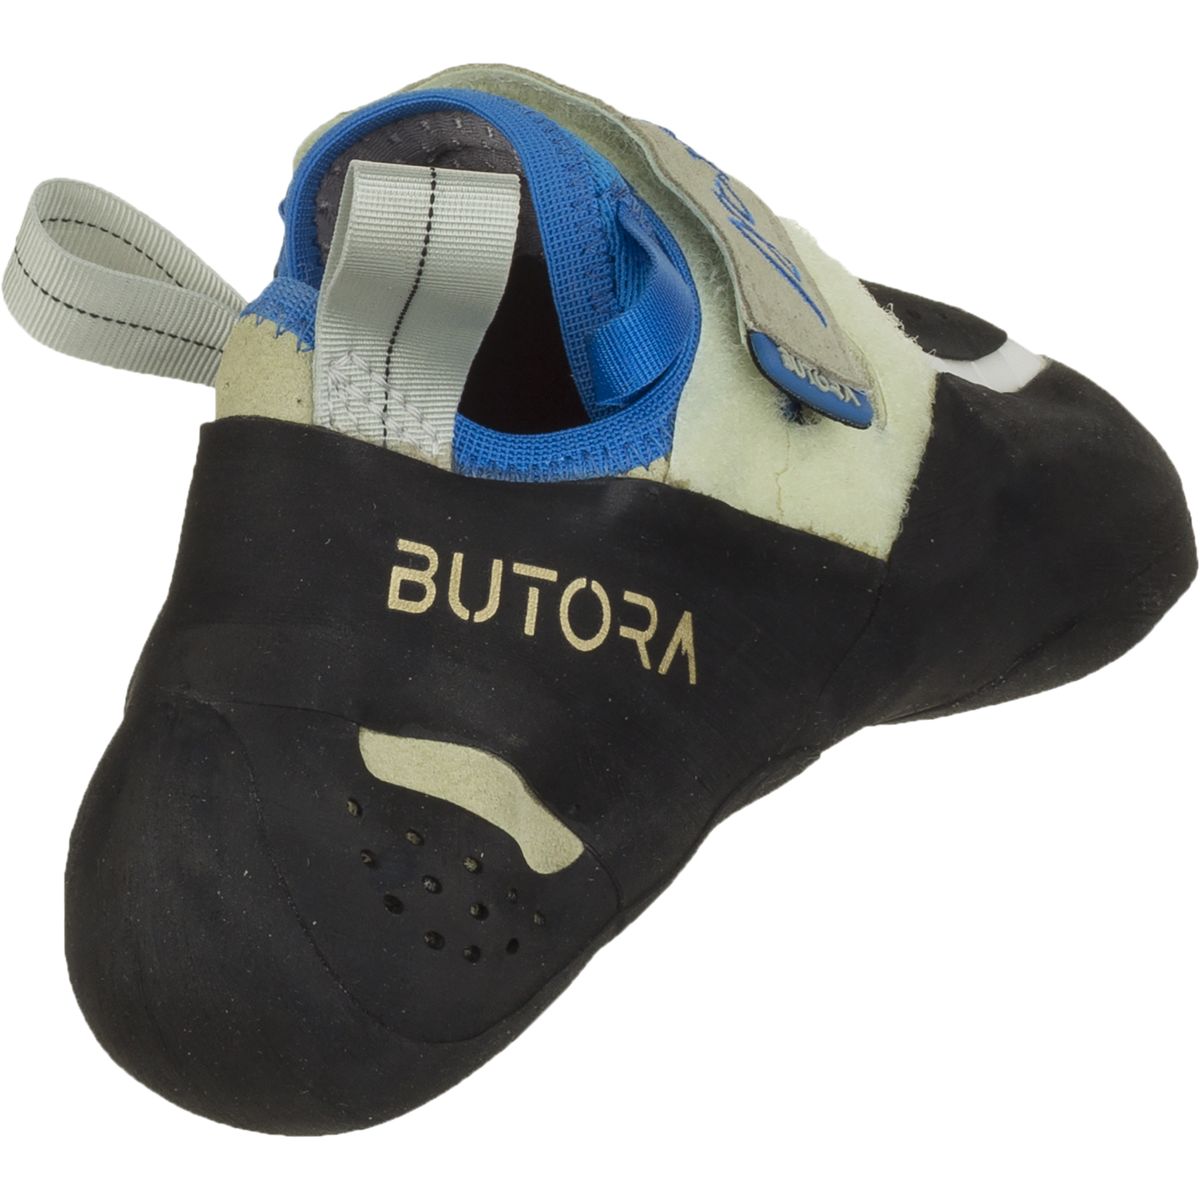 Butora Acro Climbing Shoes - Blue [Narrow Fit]